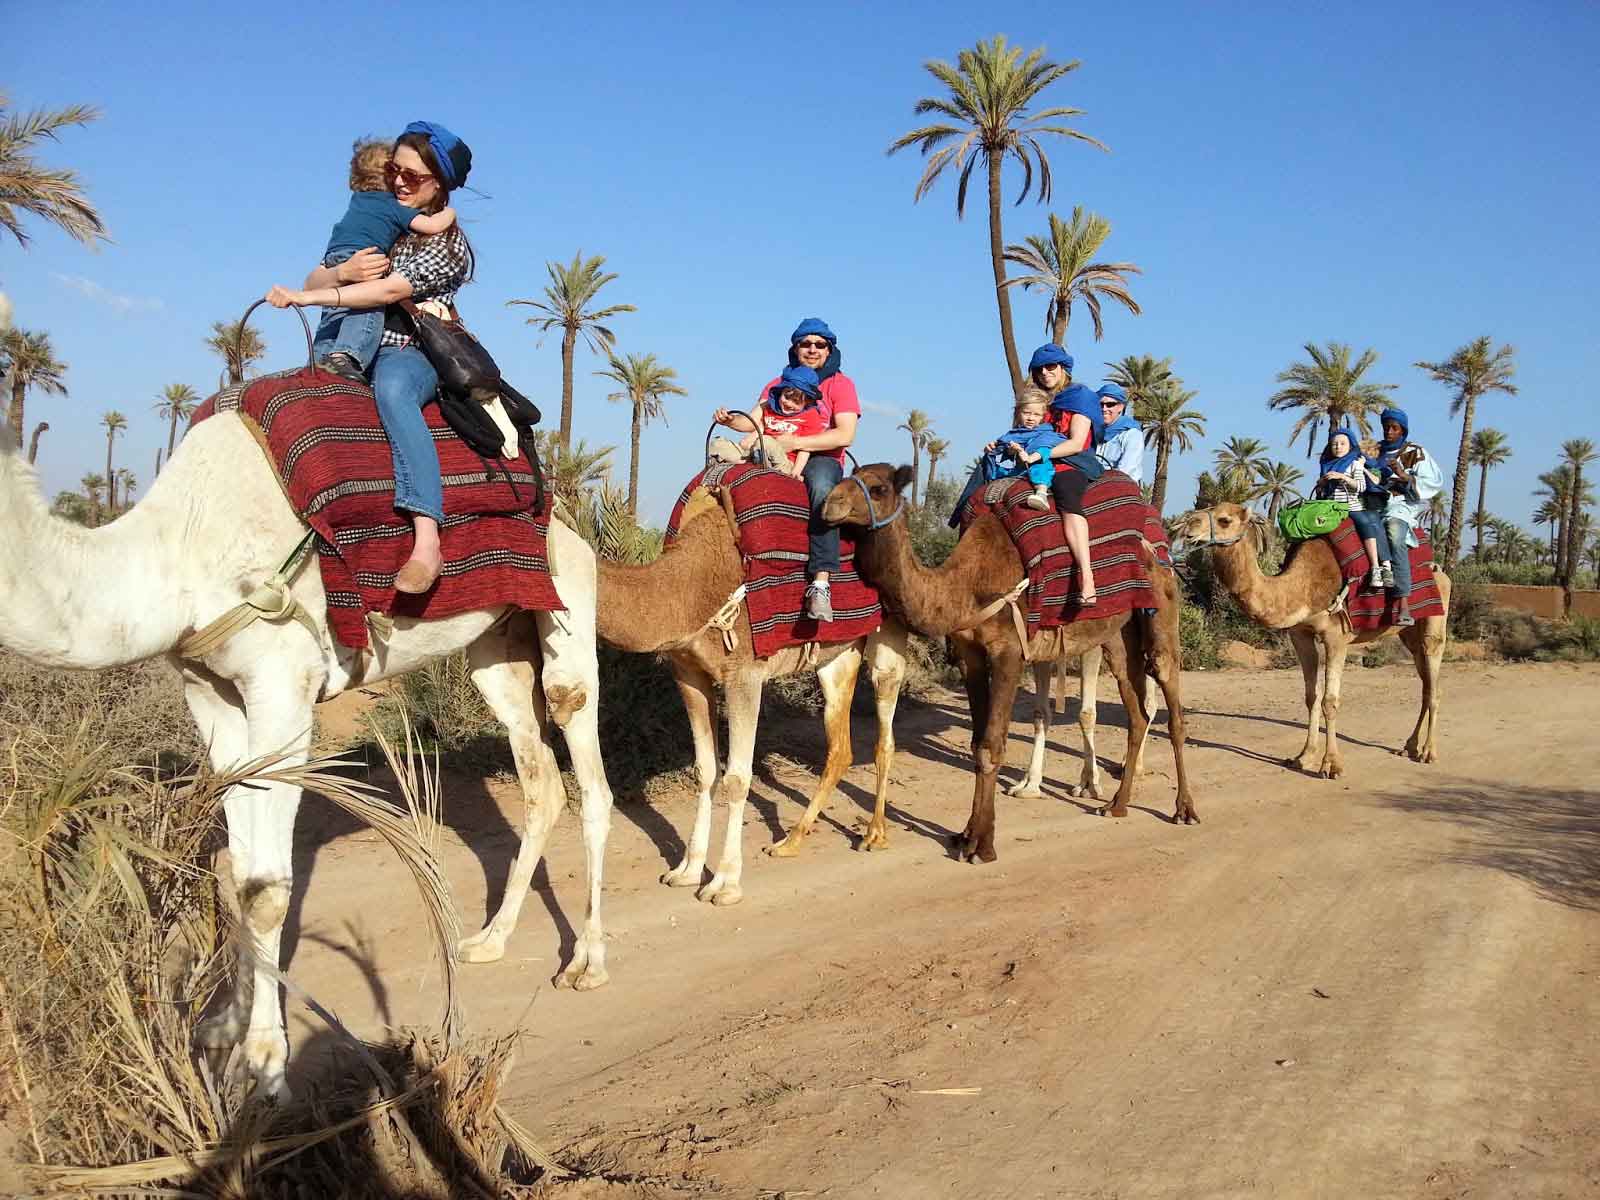 Sunset Tour & Camel Ride At Palm Grove Of Marrakech